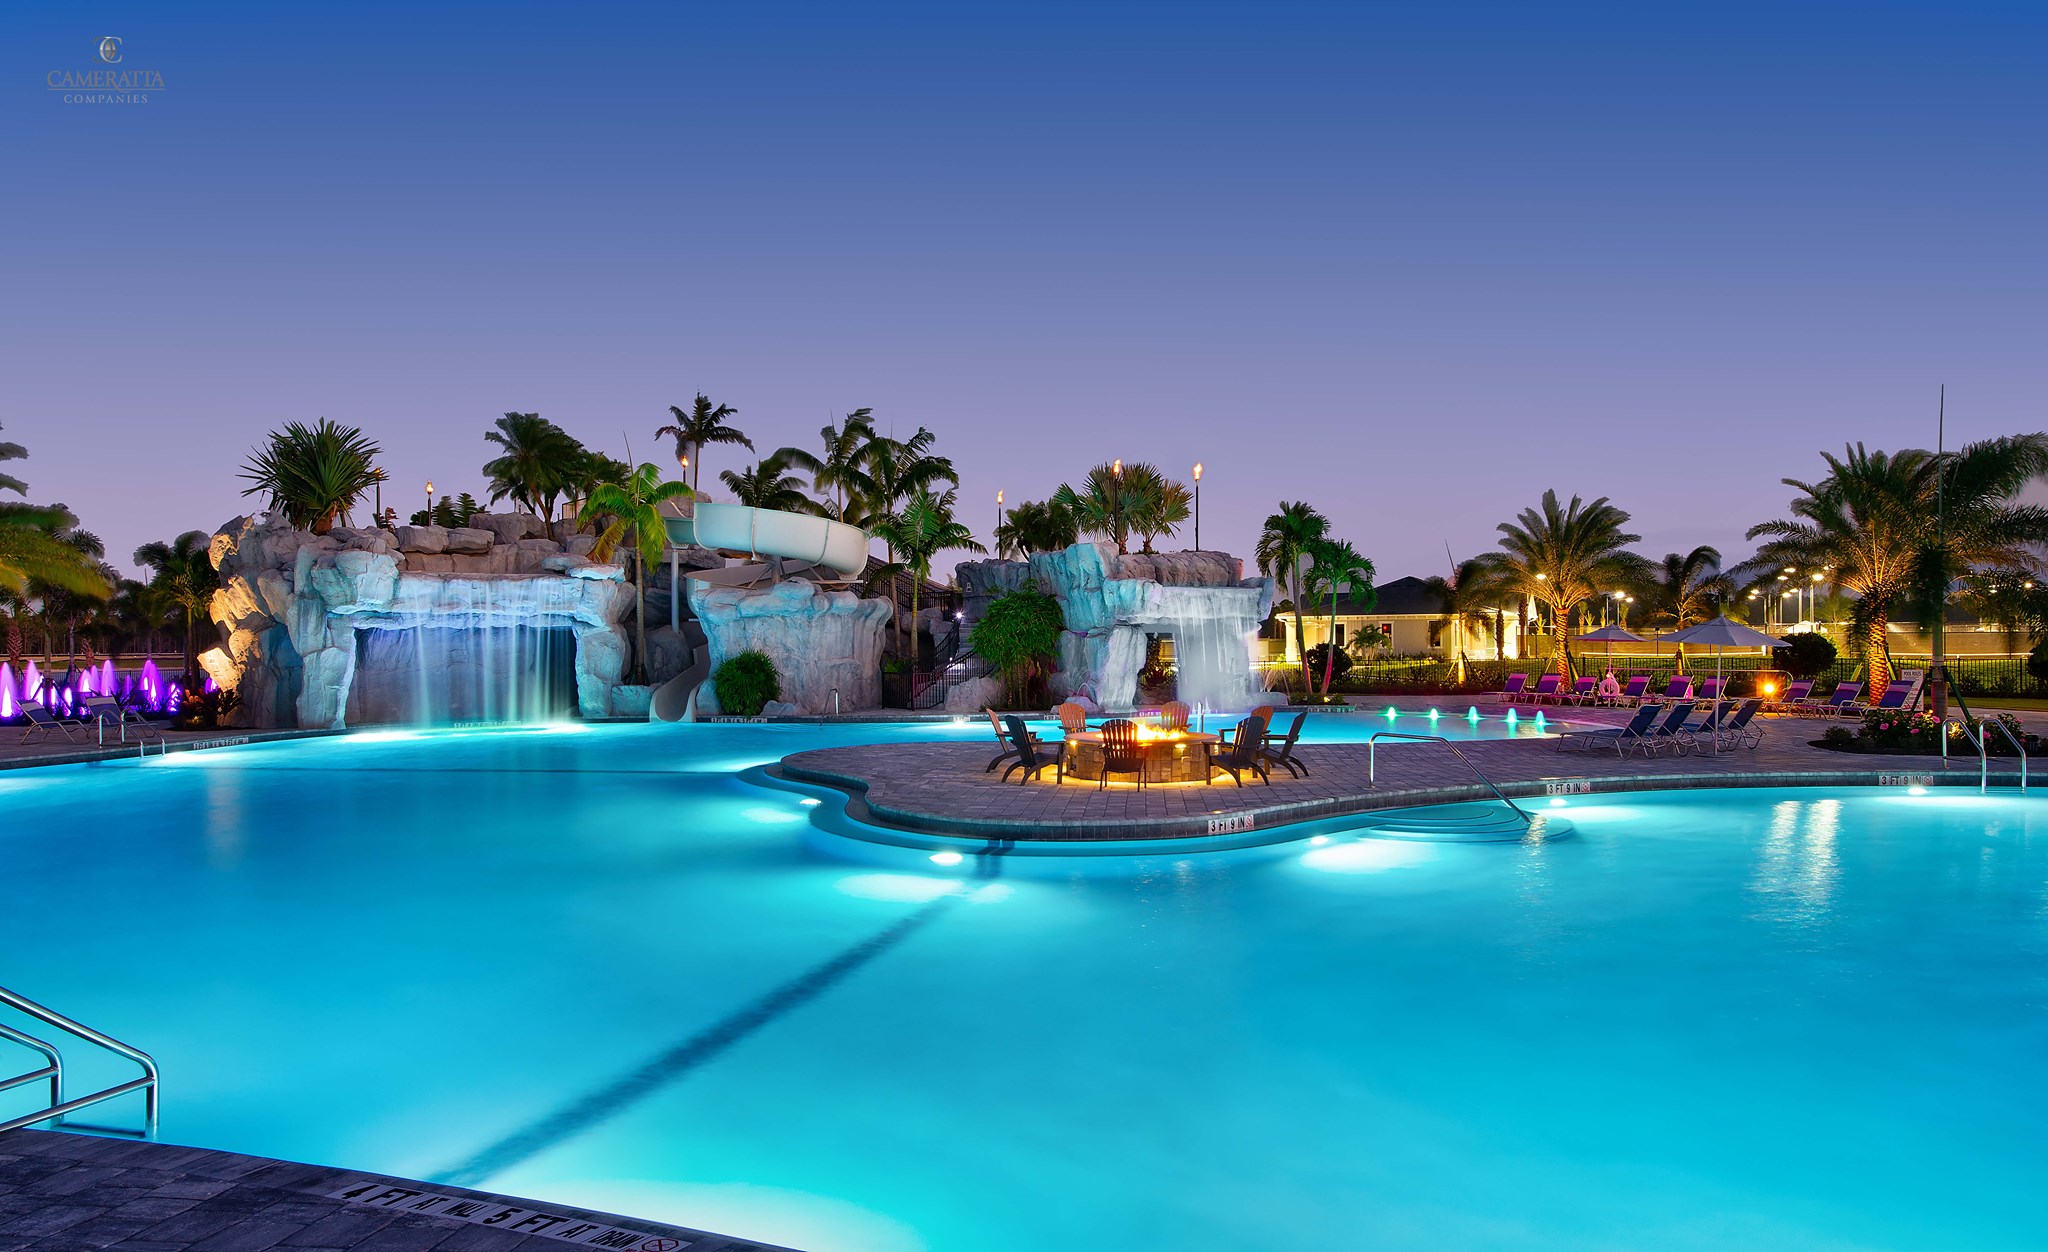 Resort Style pool